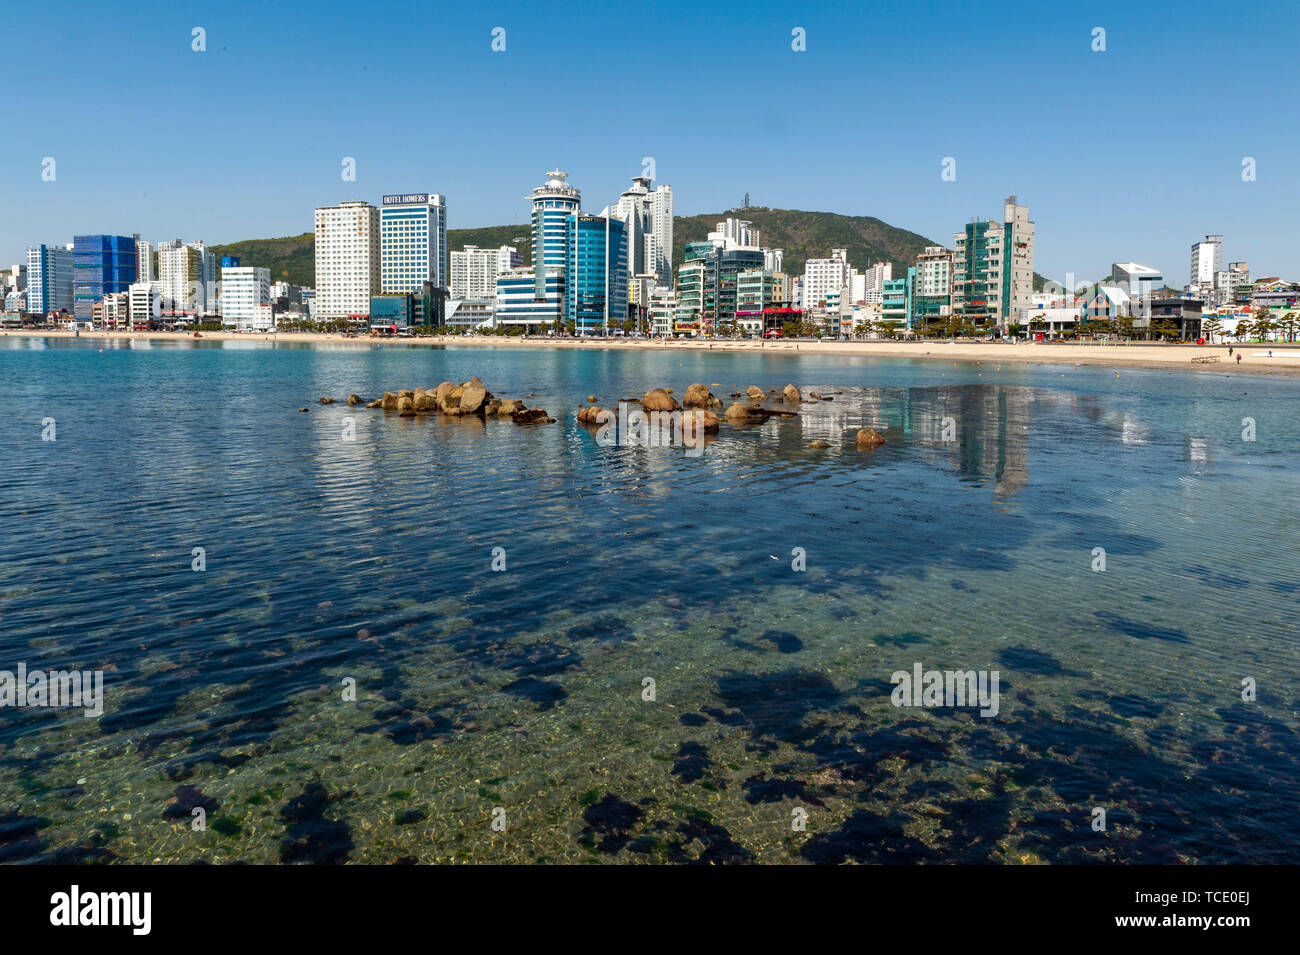 Cityscape view of coastal area of Busan at Gwangalli Beach, a popular tourist destination in Busan, South Korea Stock Photo